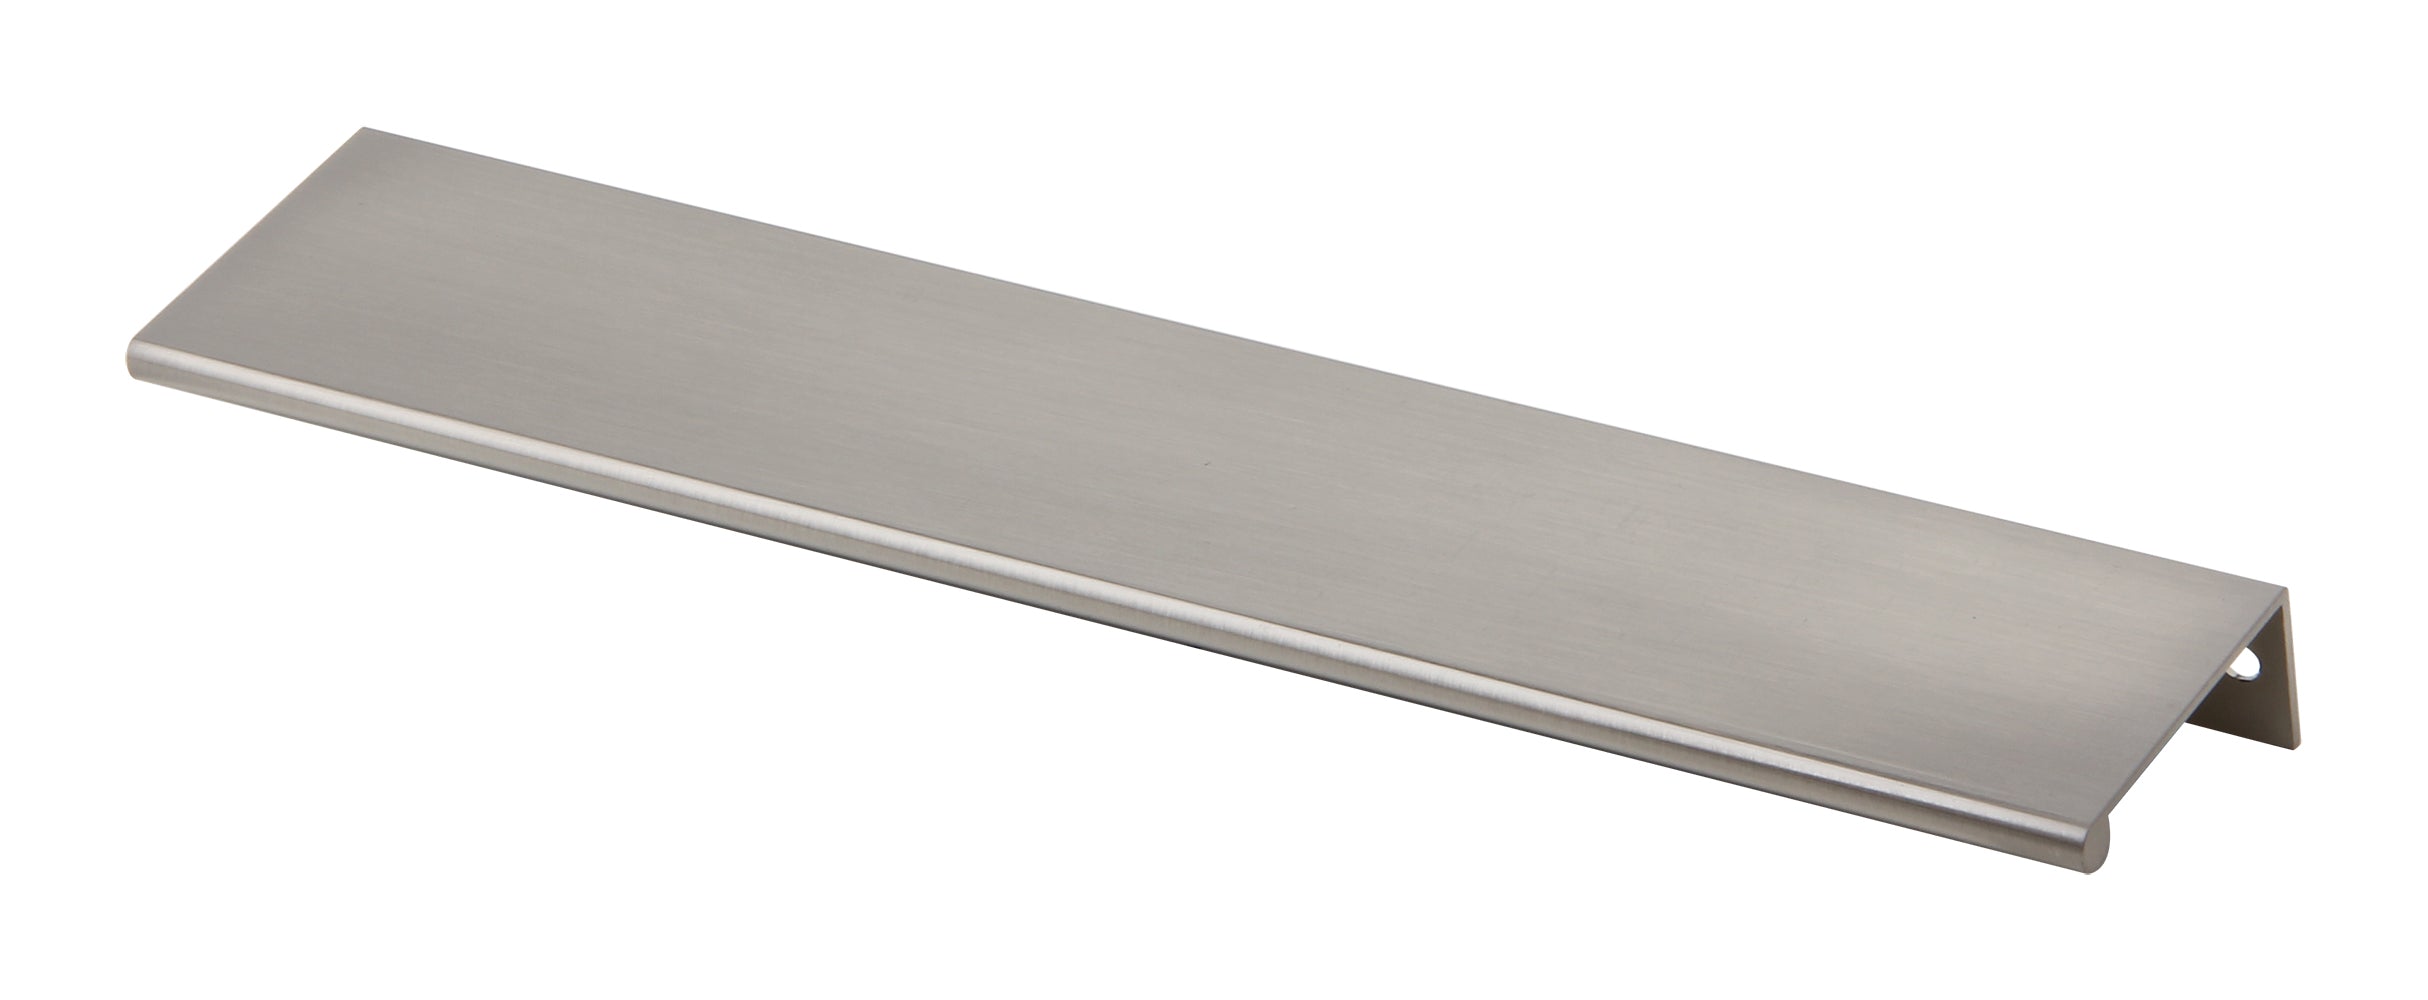 Silverline P1001 Aluminum Mount Finger Edge Tab Pull Handle in Brushed Satin Nickel Finish Various Sizes